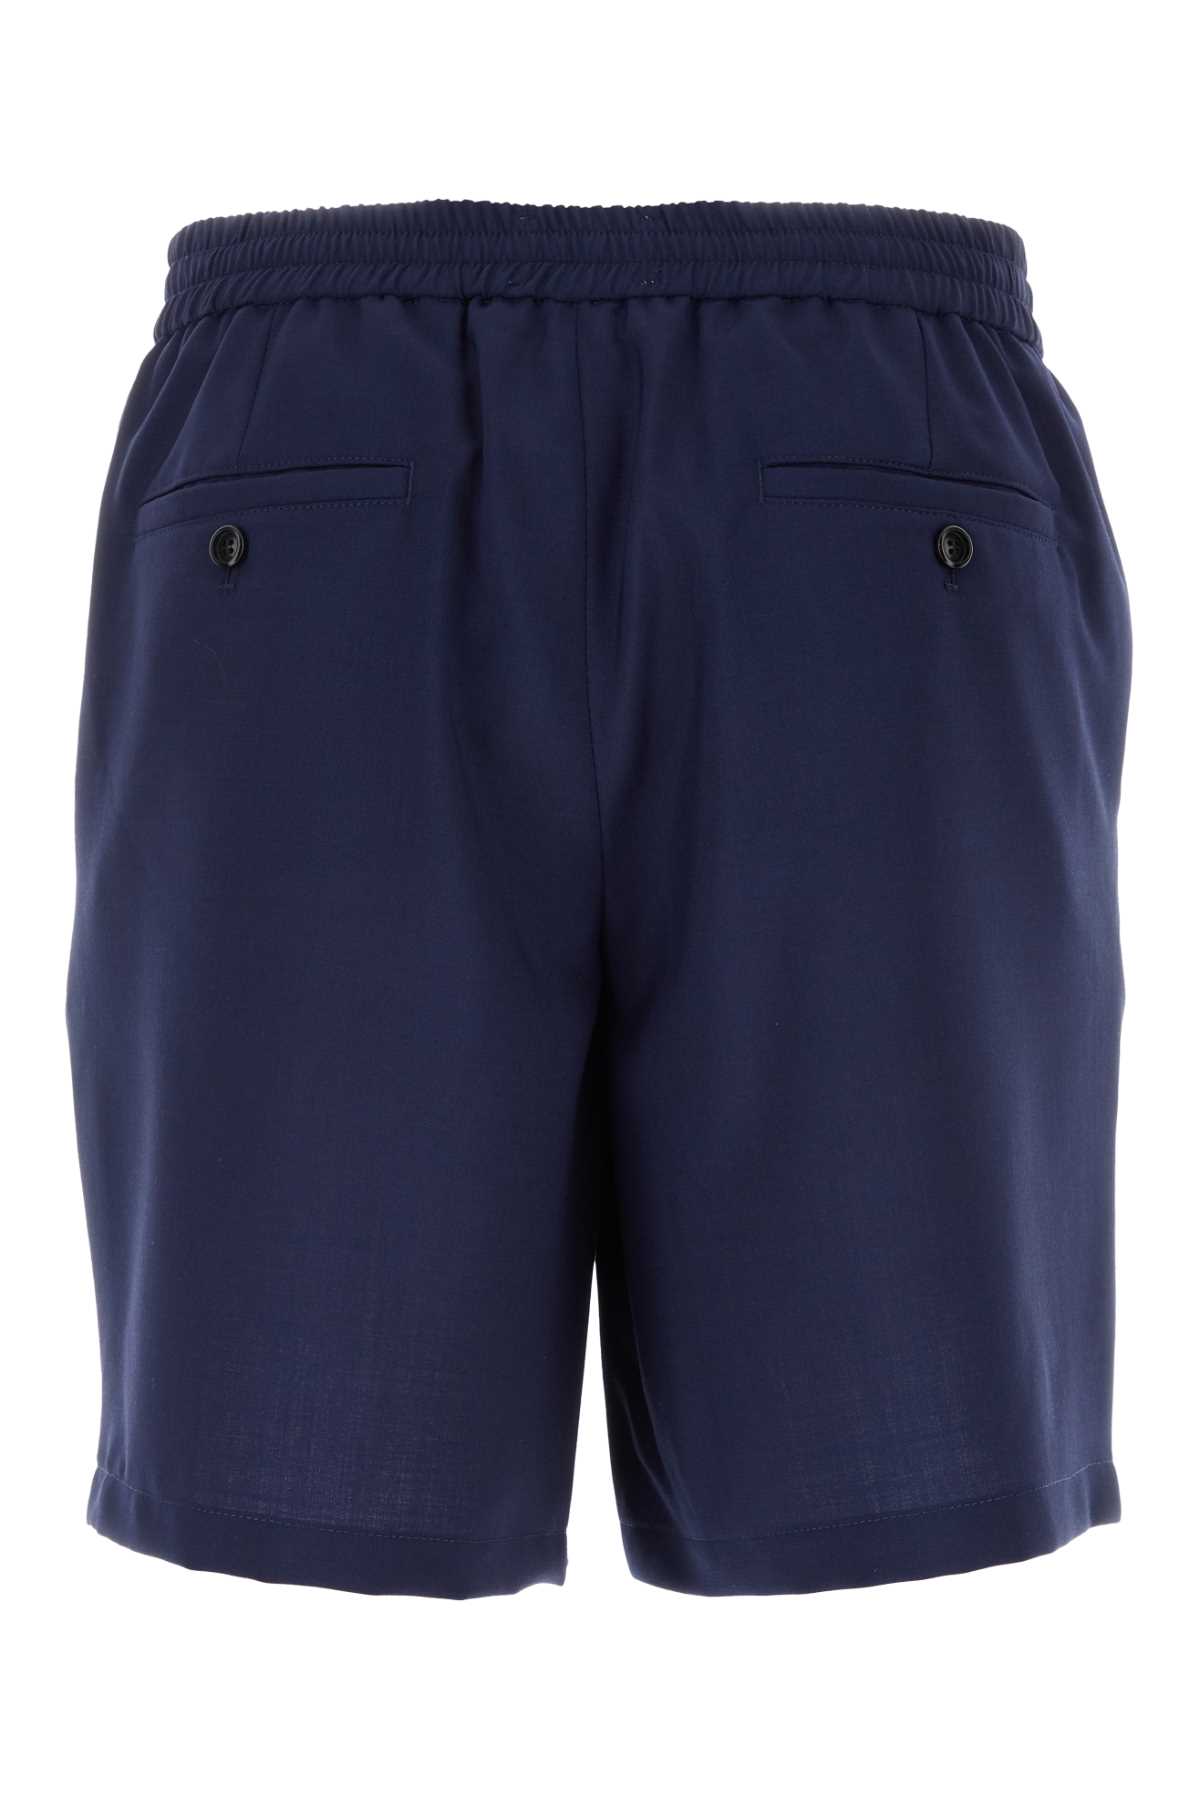 Ami Alexandre Mattiussi Navy Blue Twill Bermuda Shorts In 491